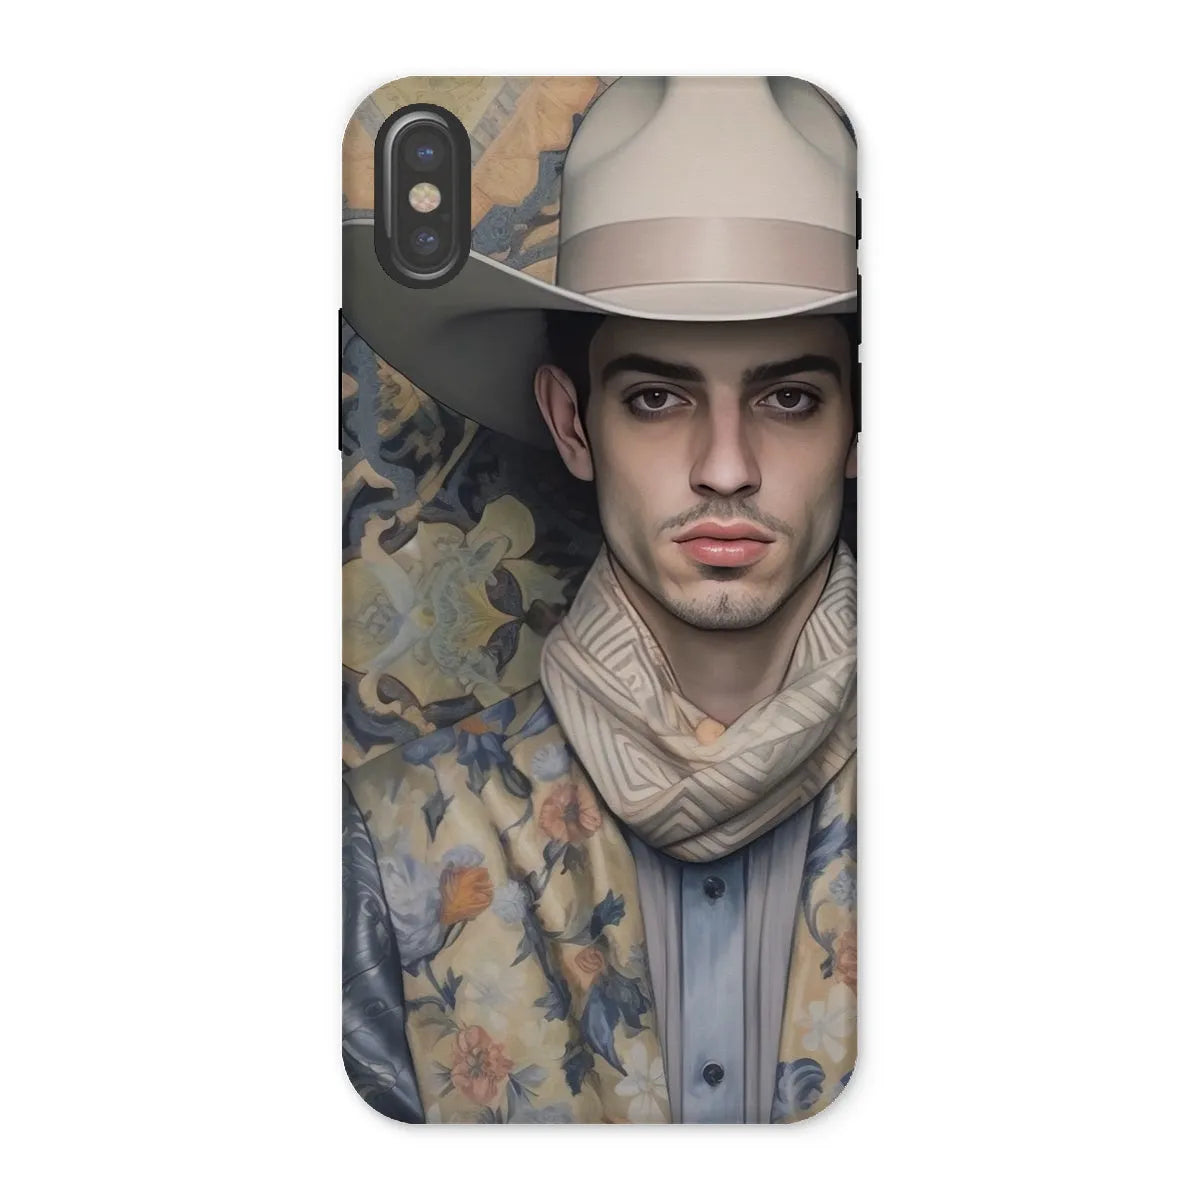 Farzad The Gay Cowboy - Dandy Gay Men Art Phone Case - Iphone x / Matte - Mobile Phone Cases - Aesthetic Art